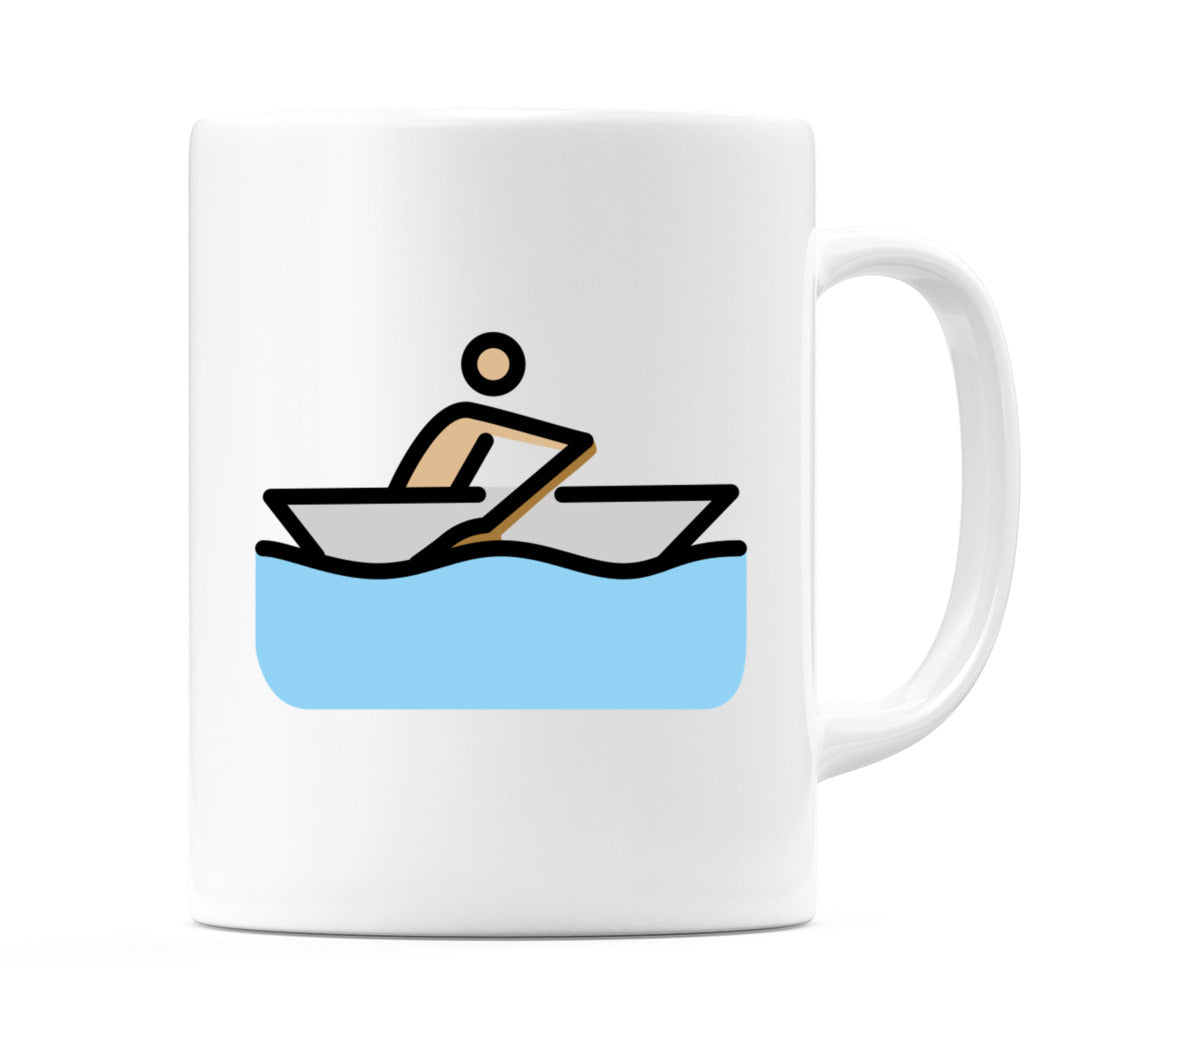 Male Rowing Boat: Medium-Light Skin Tone Emoji Mug